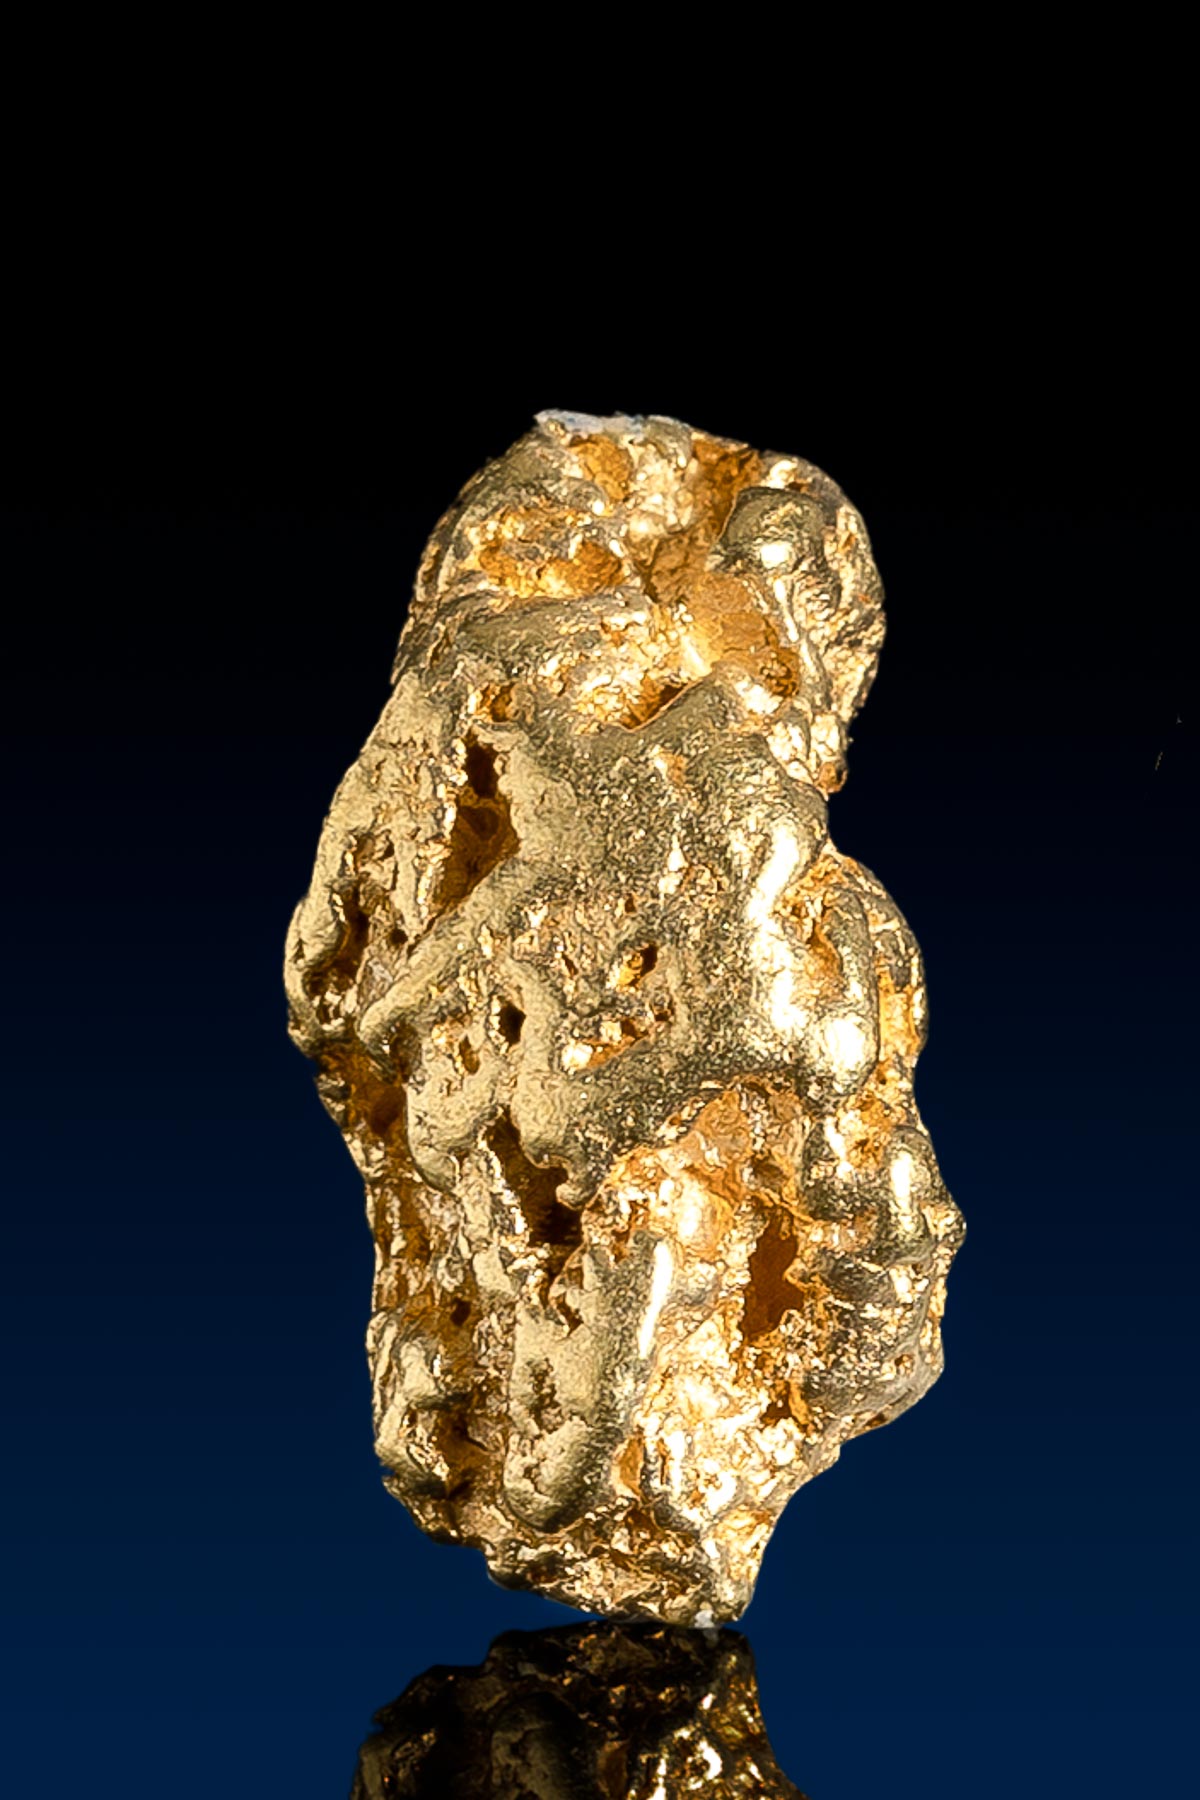 Long Tubular Natural Alaskan Gold Nugget - 2021 Mining Season